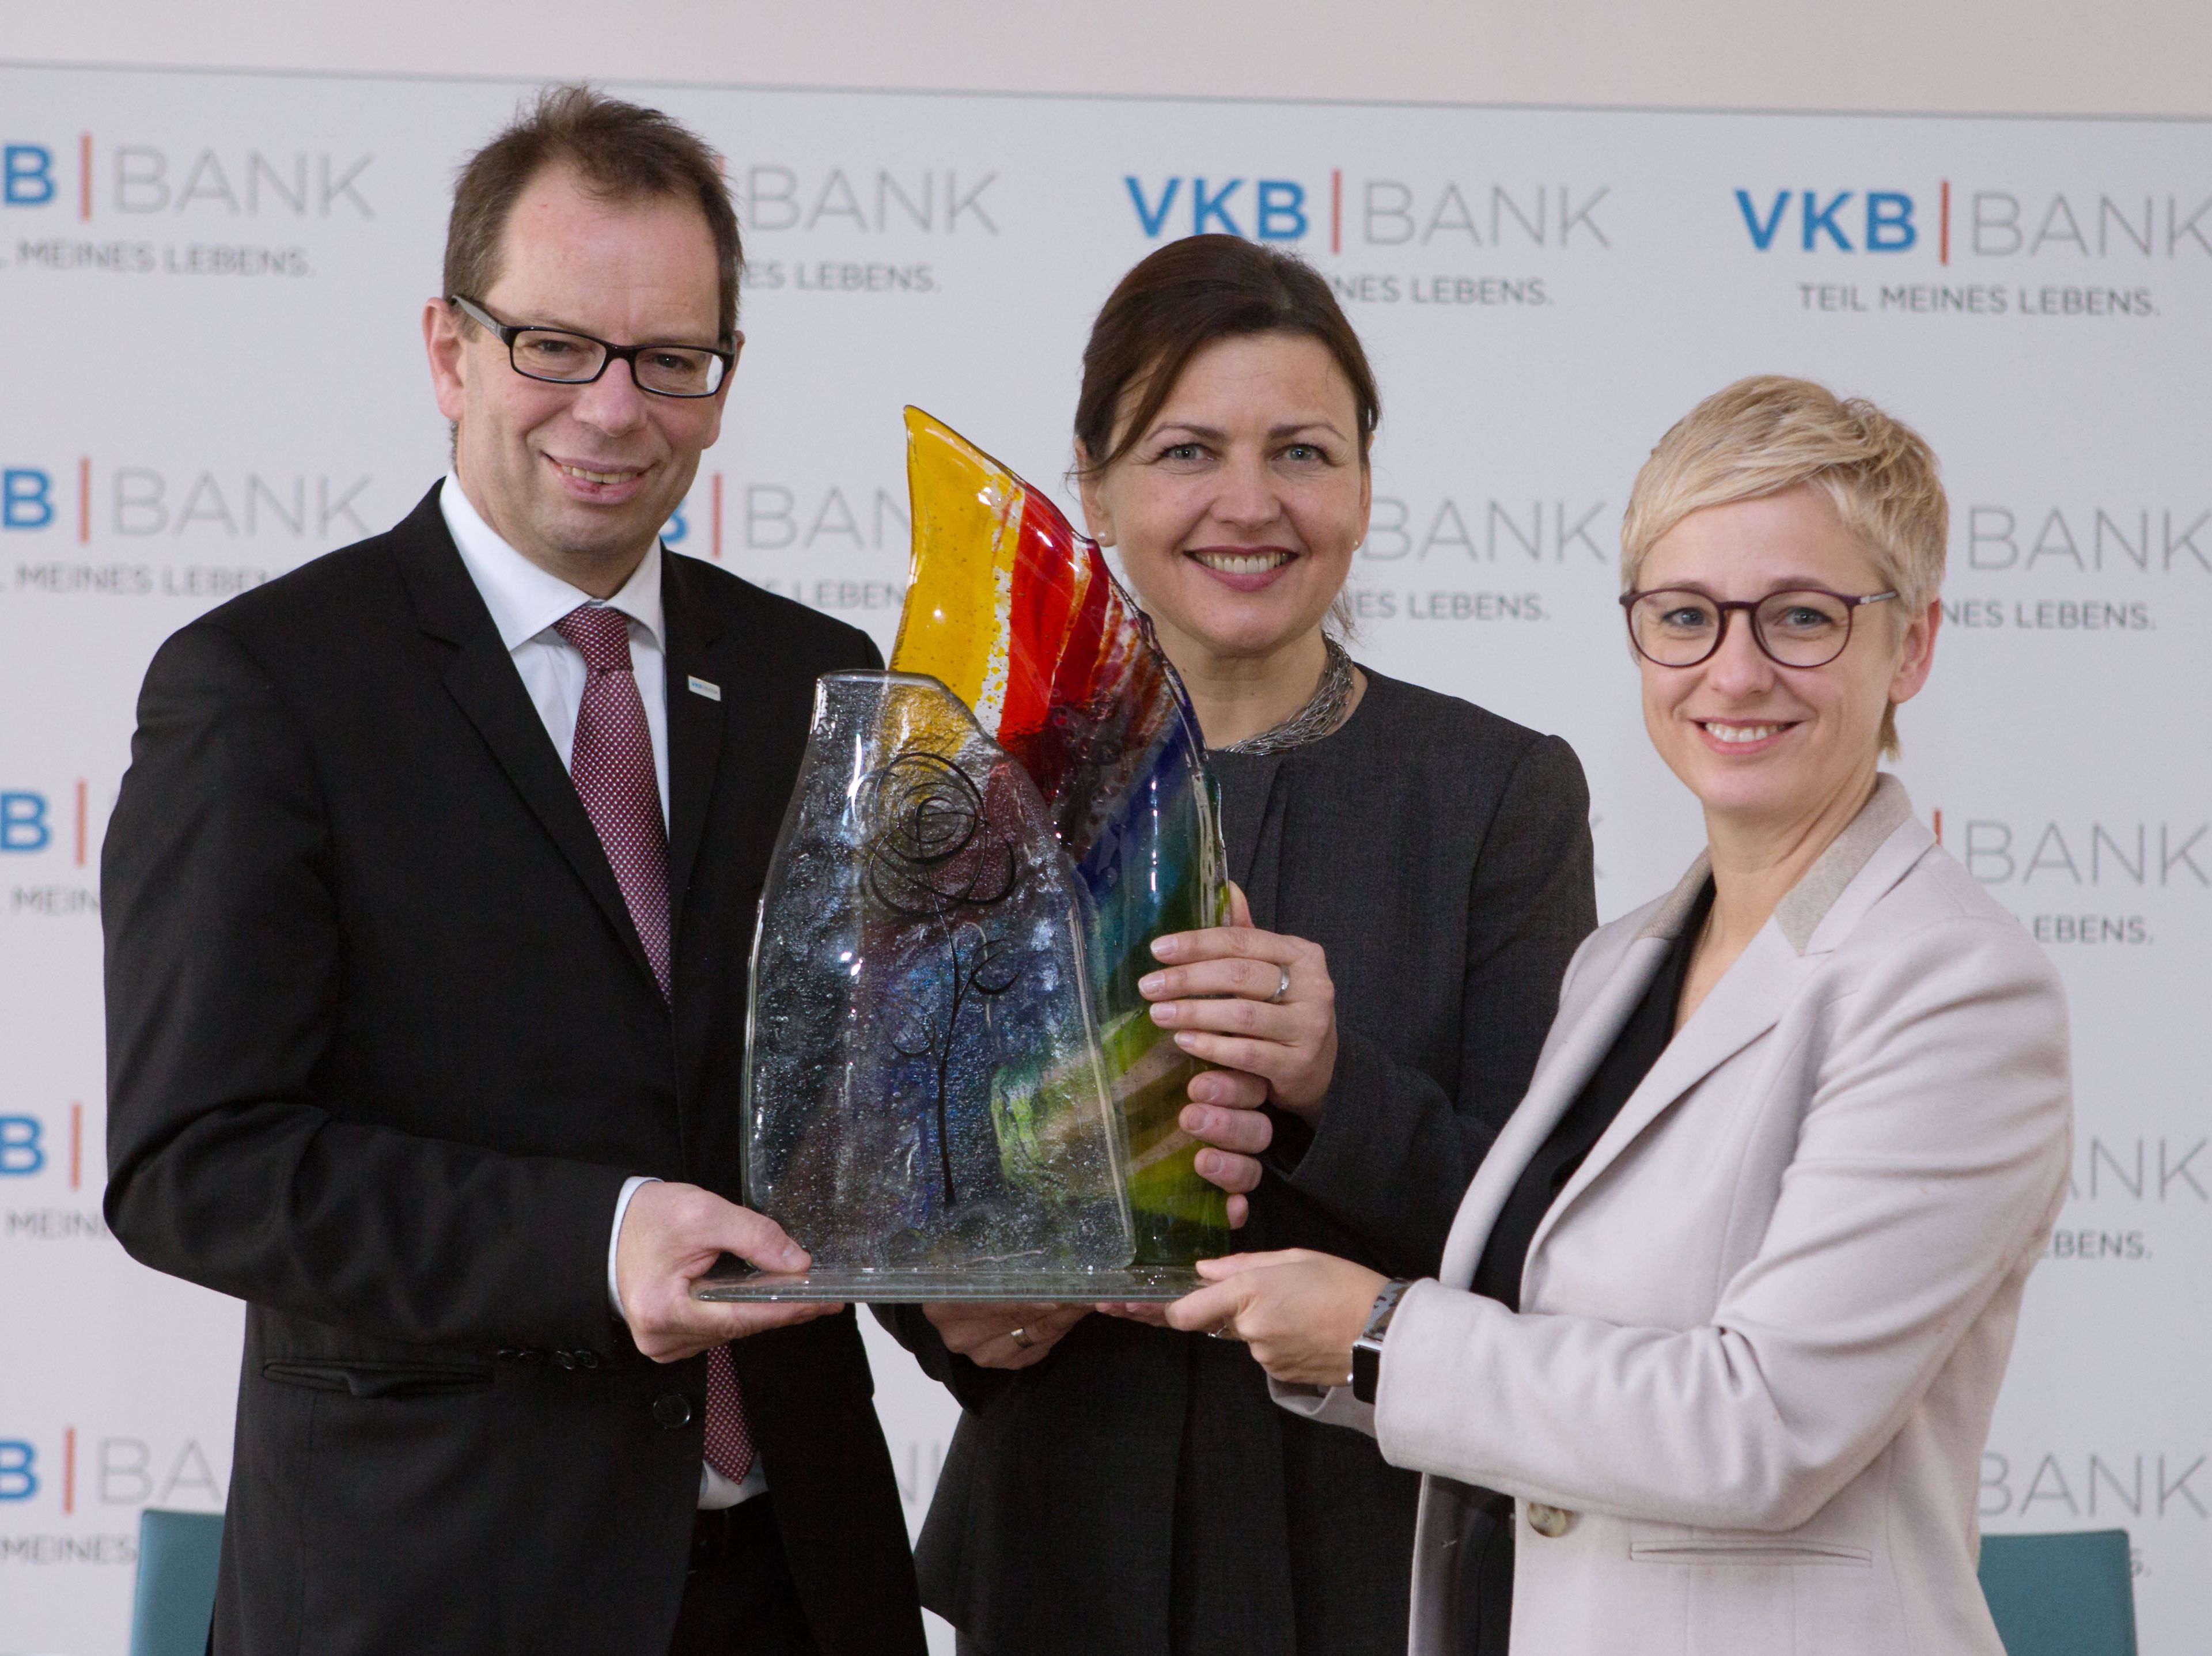 (c) VKB-Bank/rubra